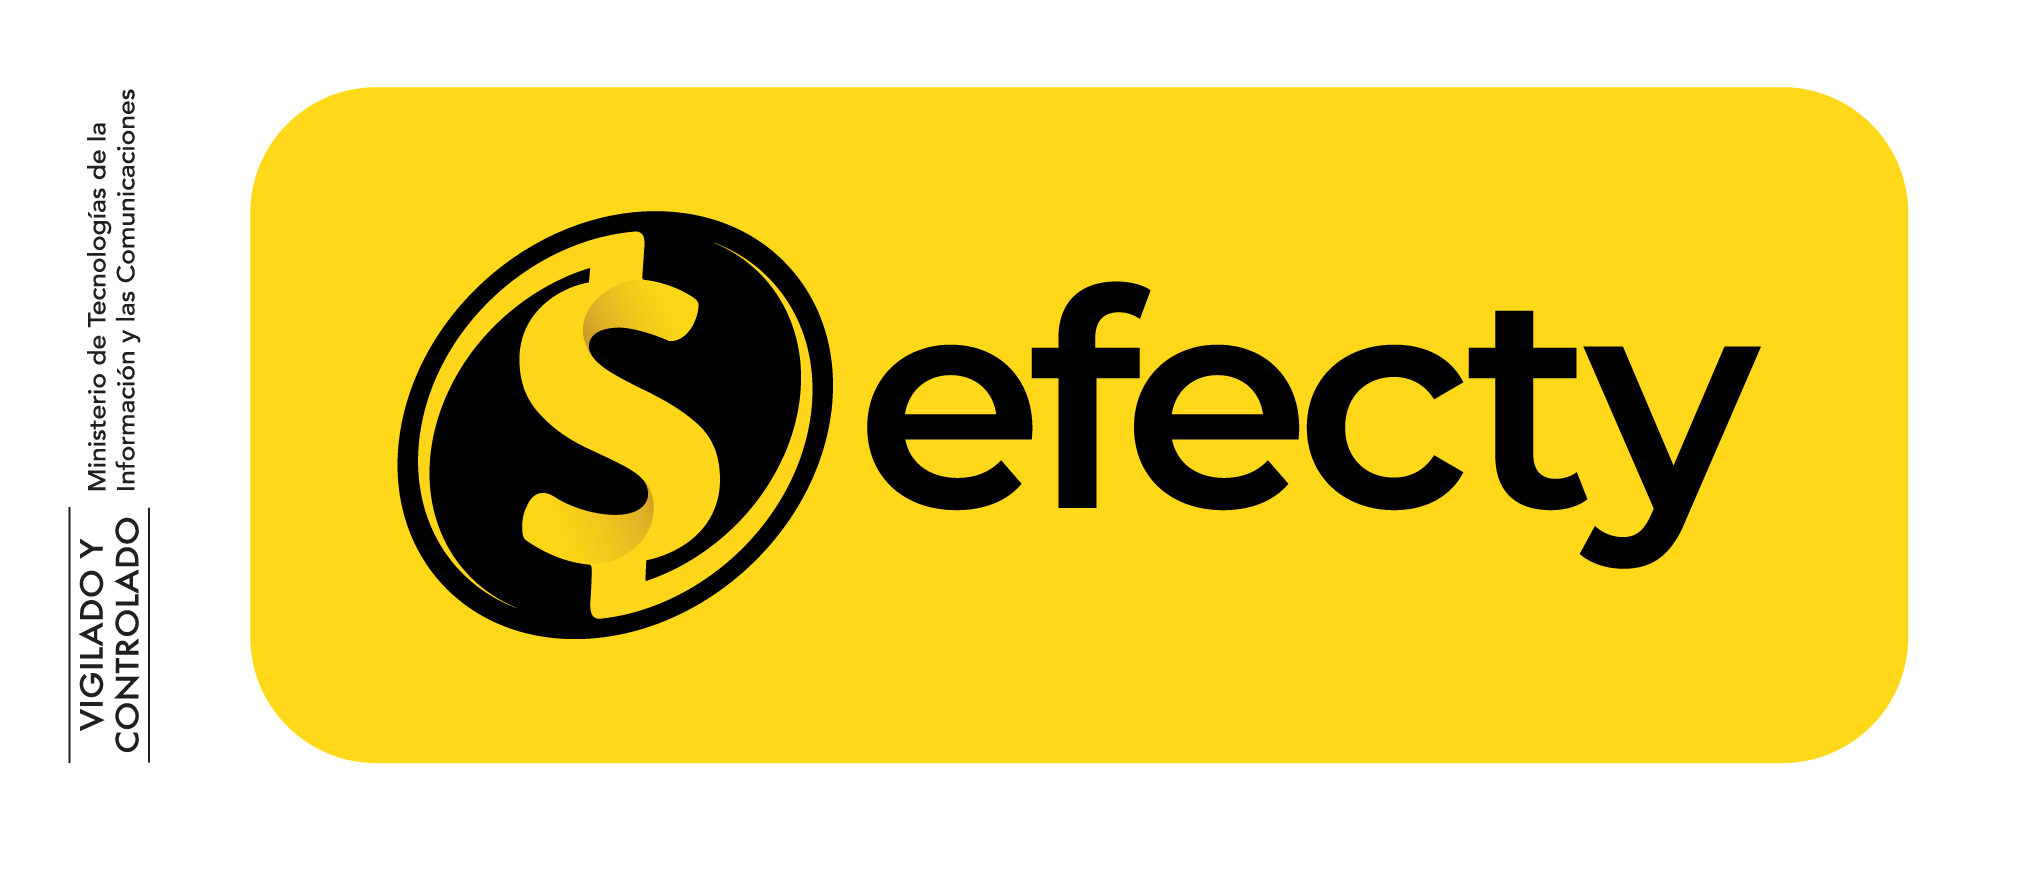 Efecty_Logo.png